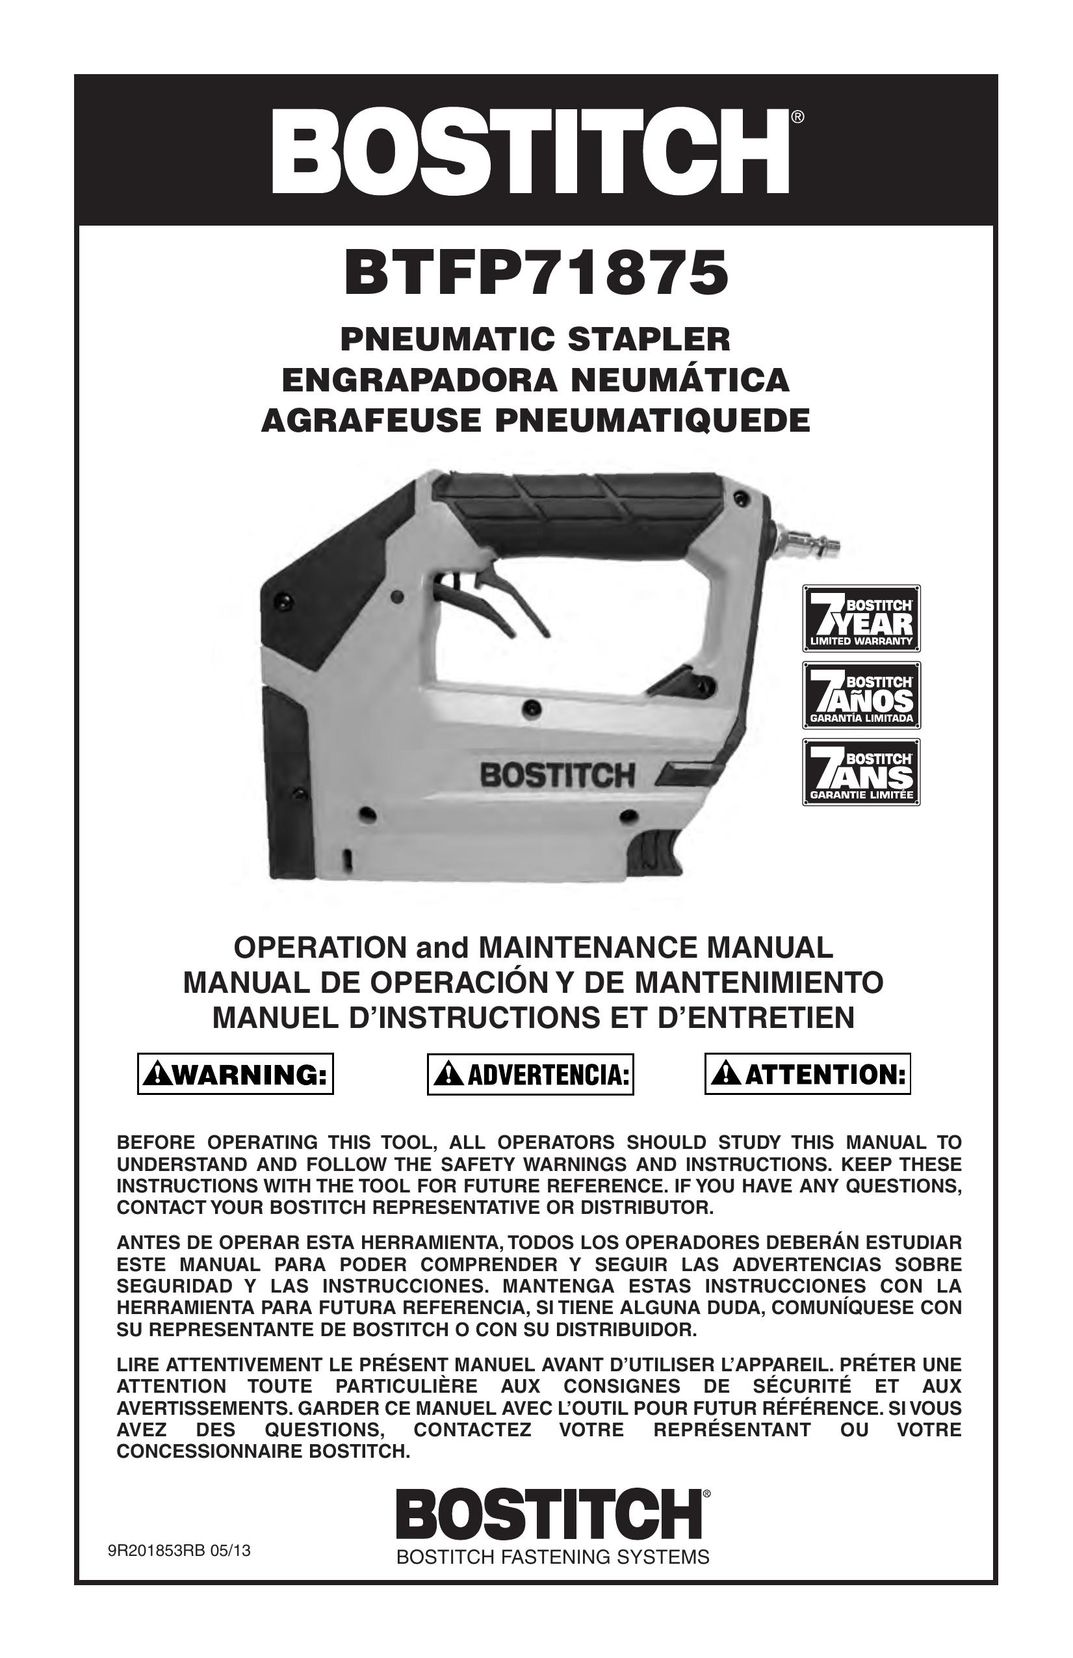 Bostitch BTFP71875 Staple Gun User Manual